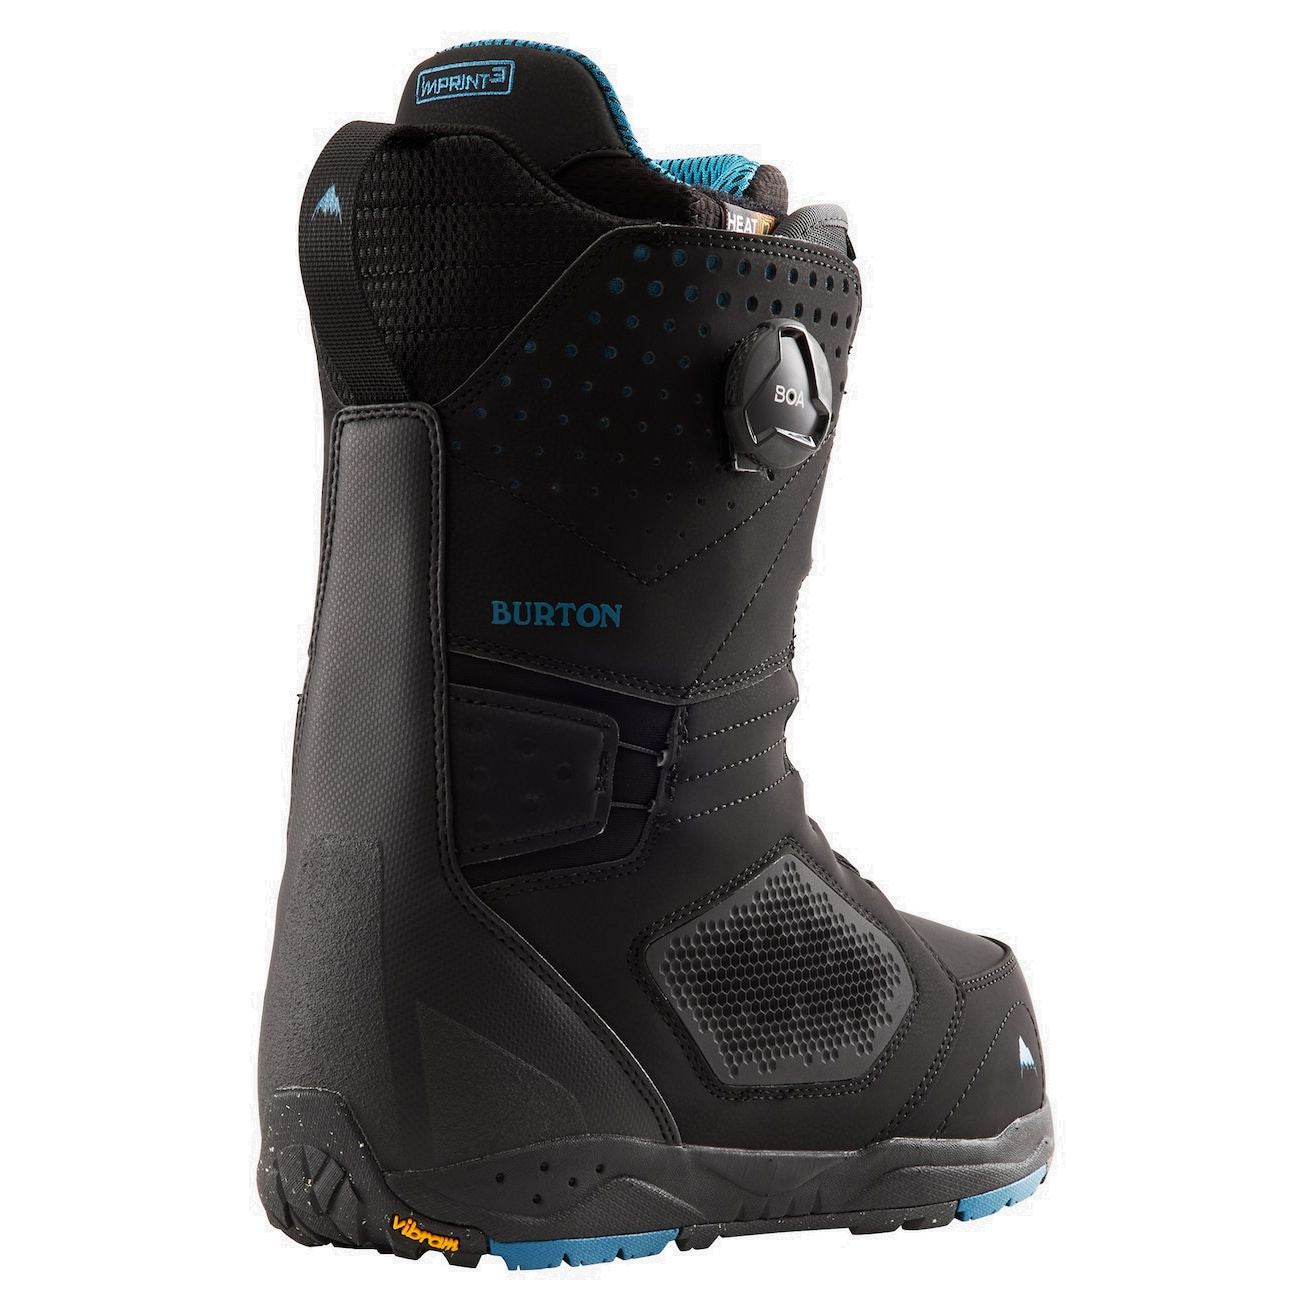 Men's Burton Photon BOA Snowboard Boots Black Snowboard Boots